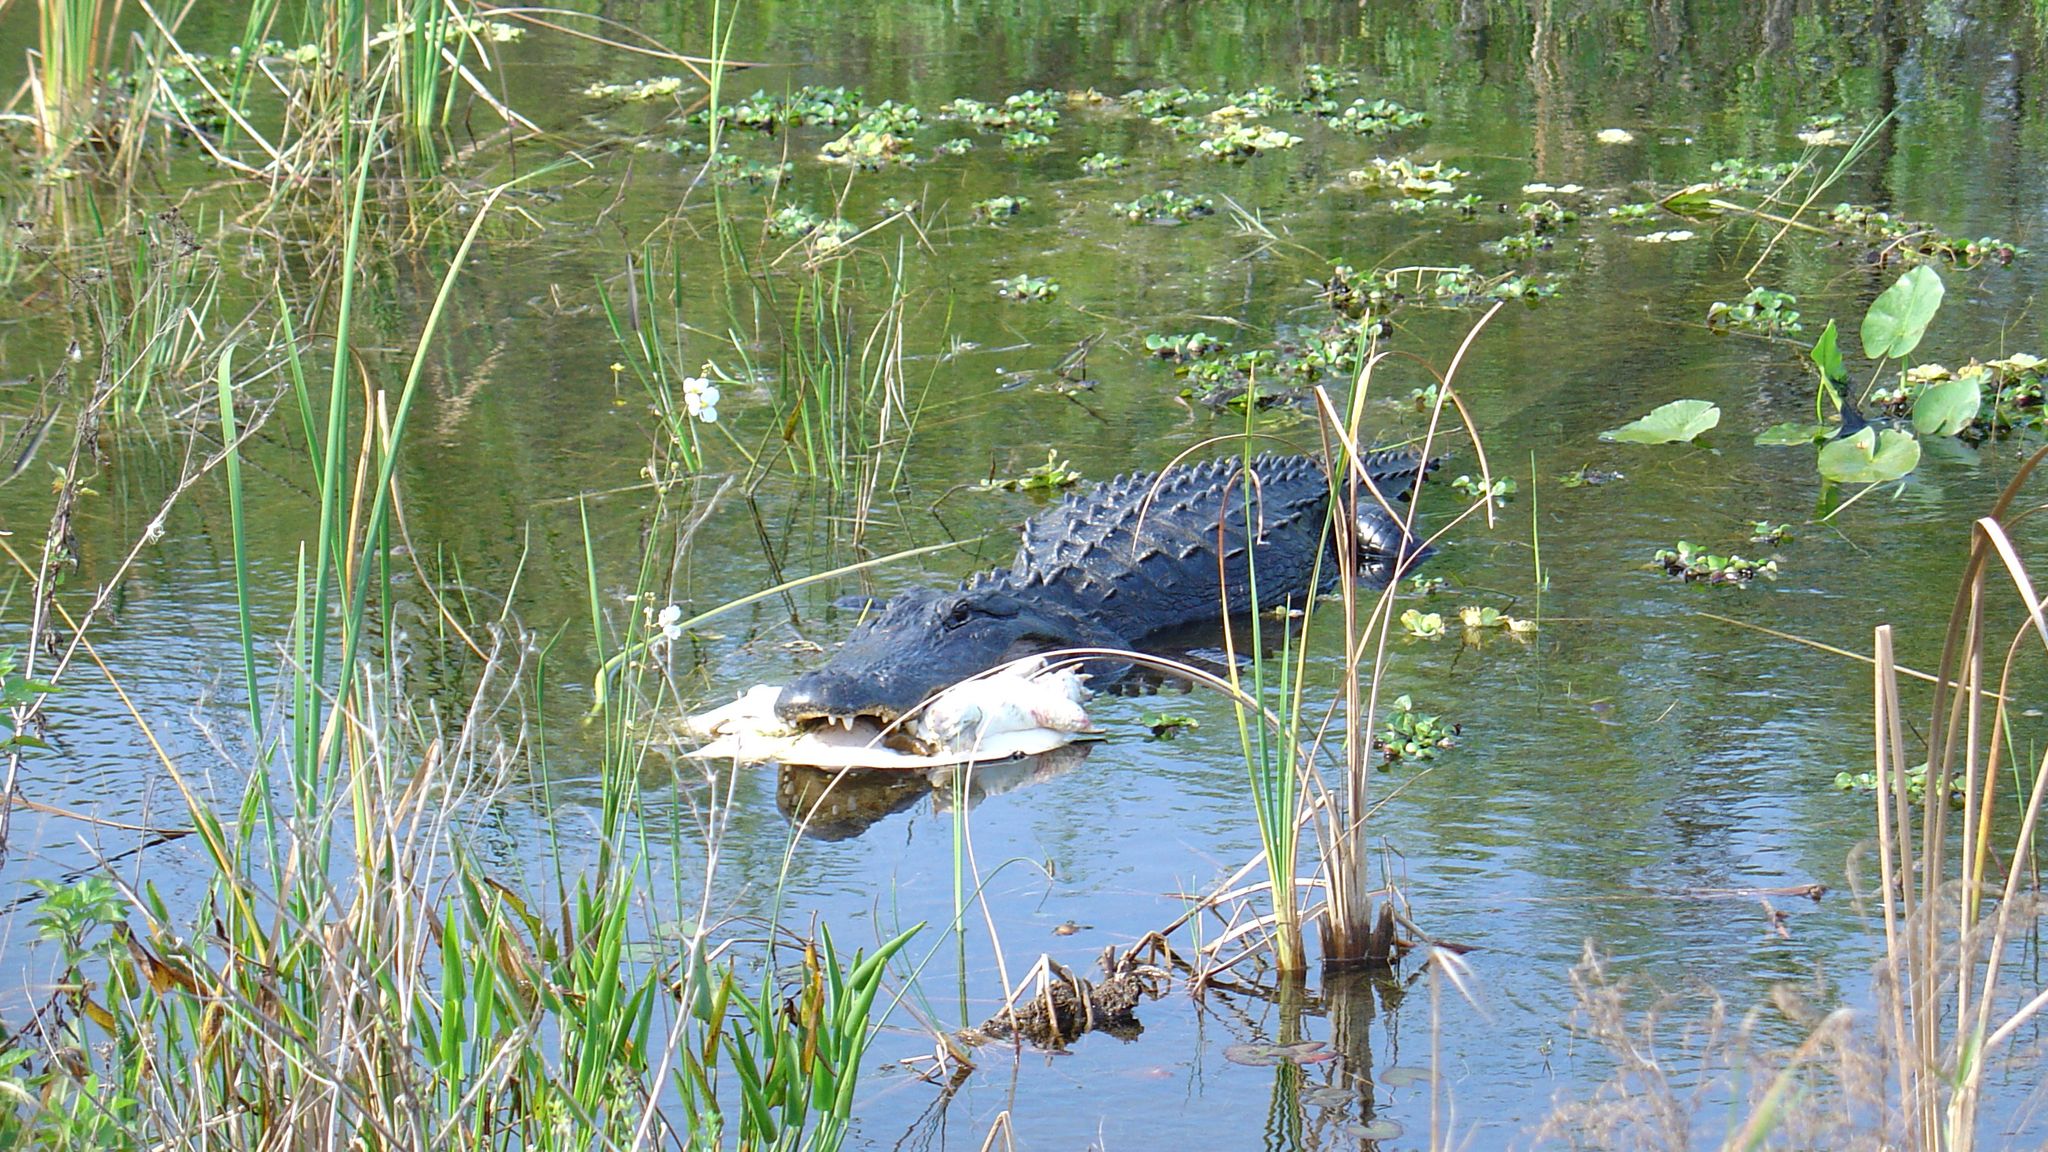 Florida alligator attack 85yearold woman killed while walking dog